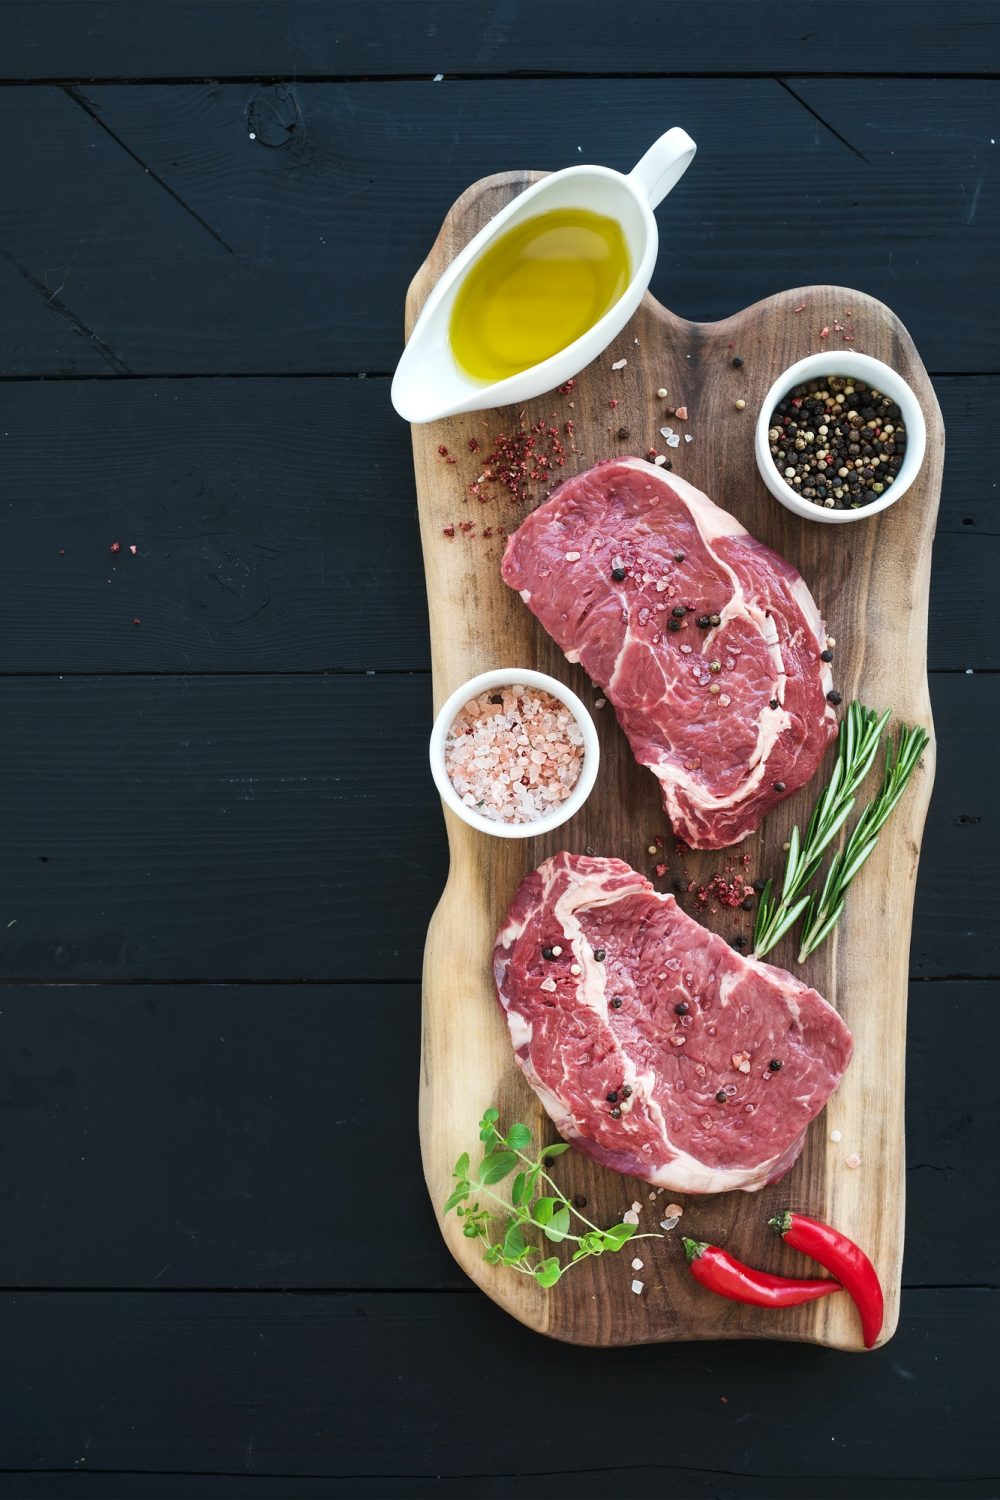 raw-fresh-meat-ribeye-steak-entrecote-and-seasonings-on-cutting-board-over-dark-wooden-background-.jpg